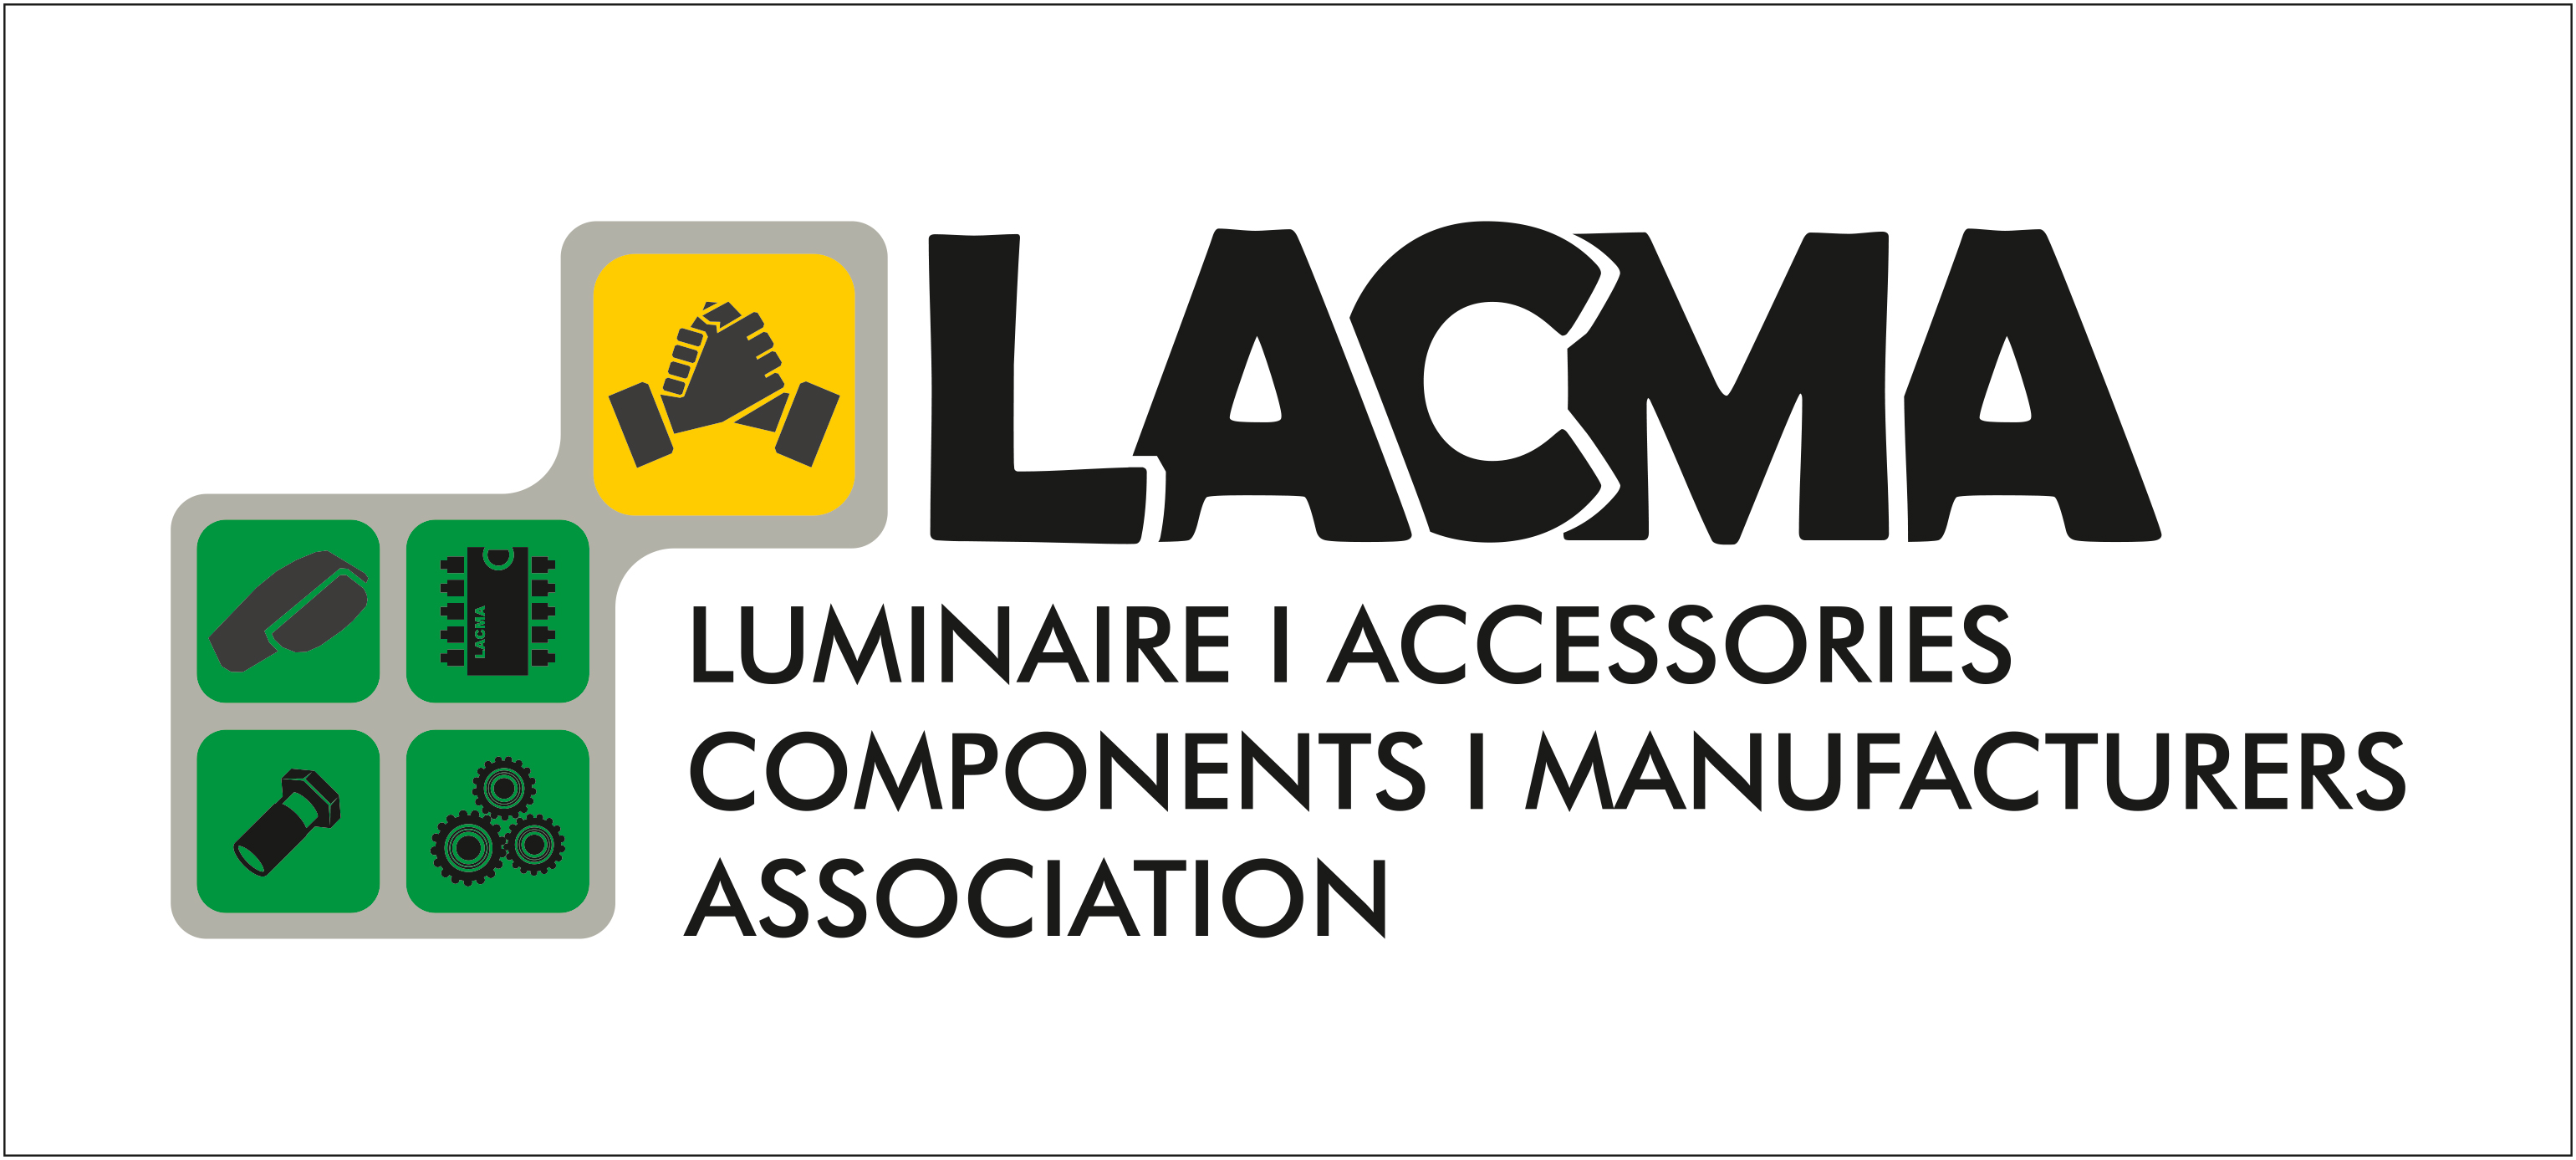 Luminaire Accessories Components Manufacturers Association